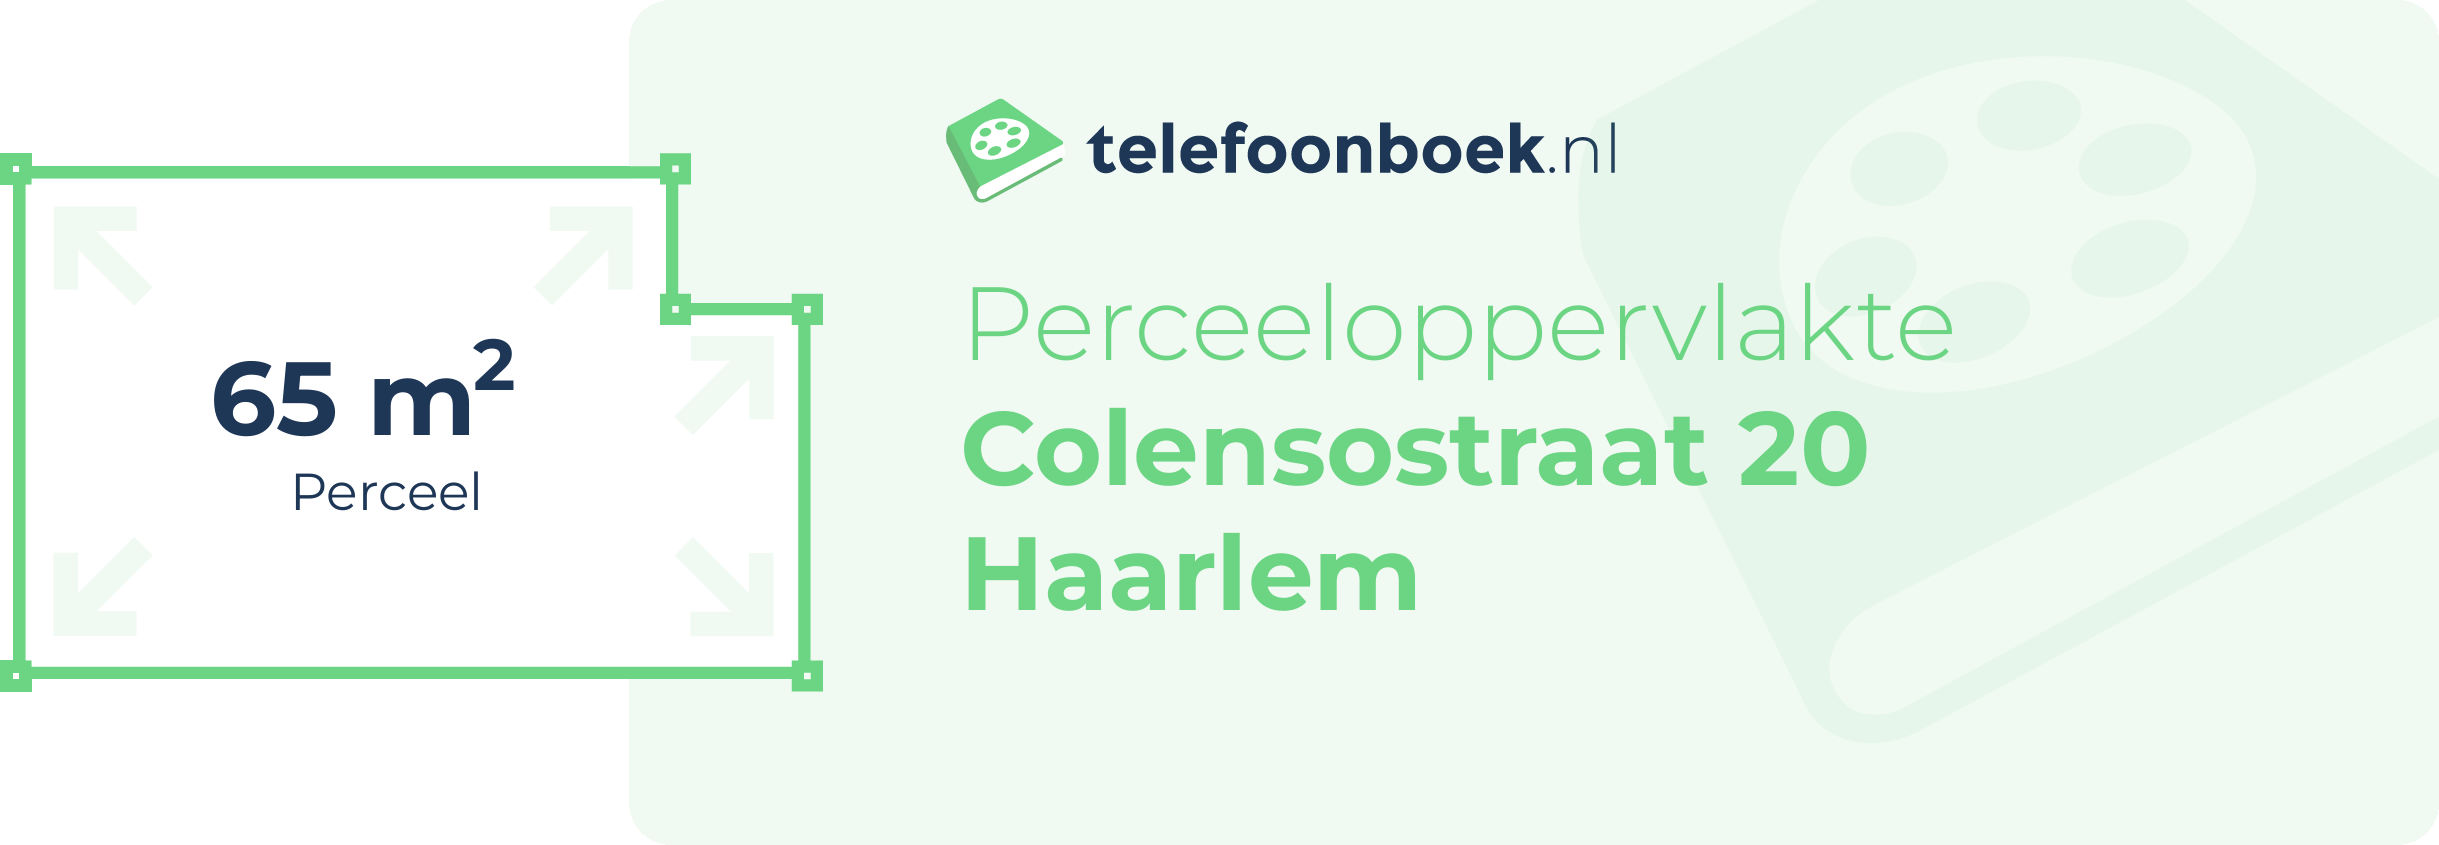 Perceeloppervlakte Colensostraat 20 Haarlem